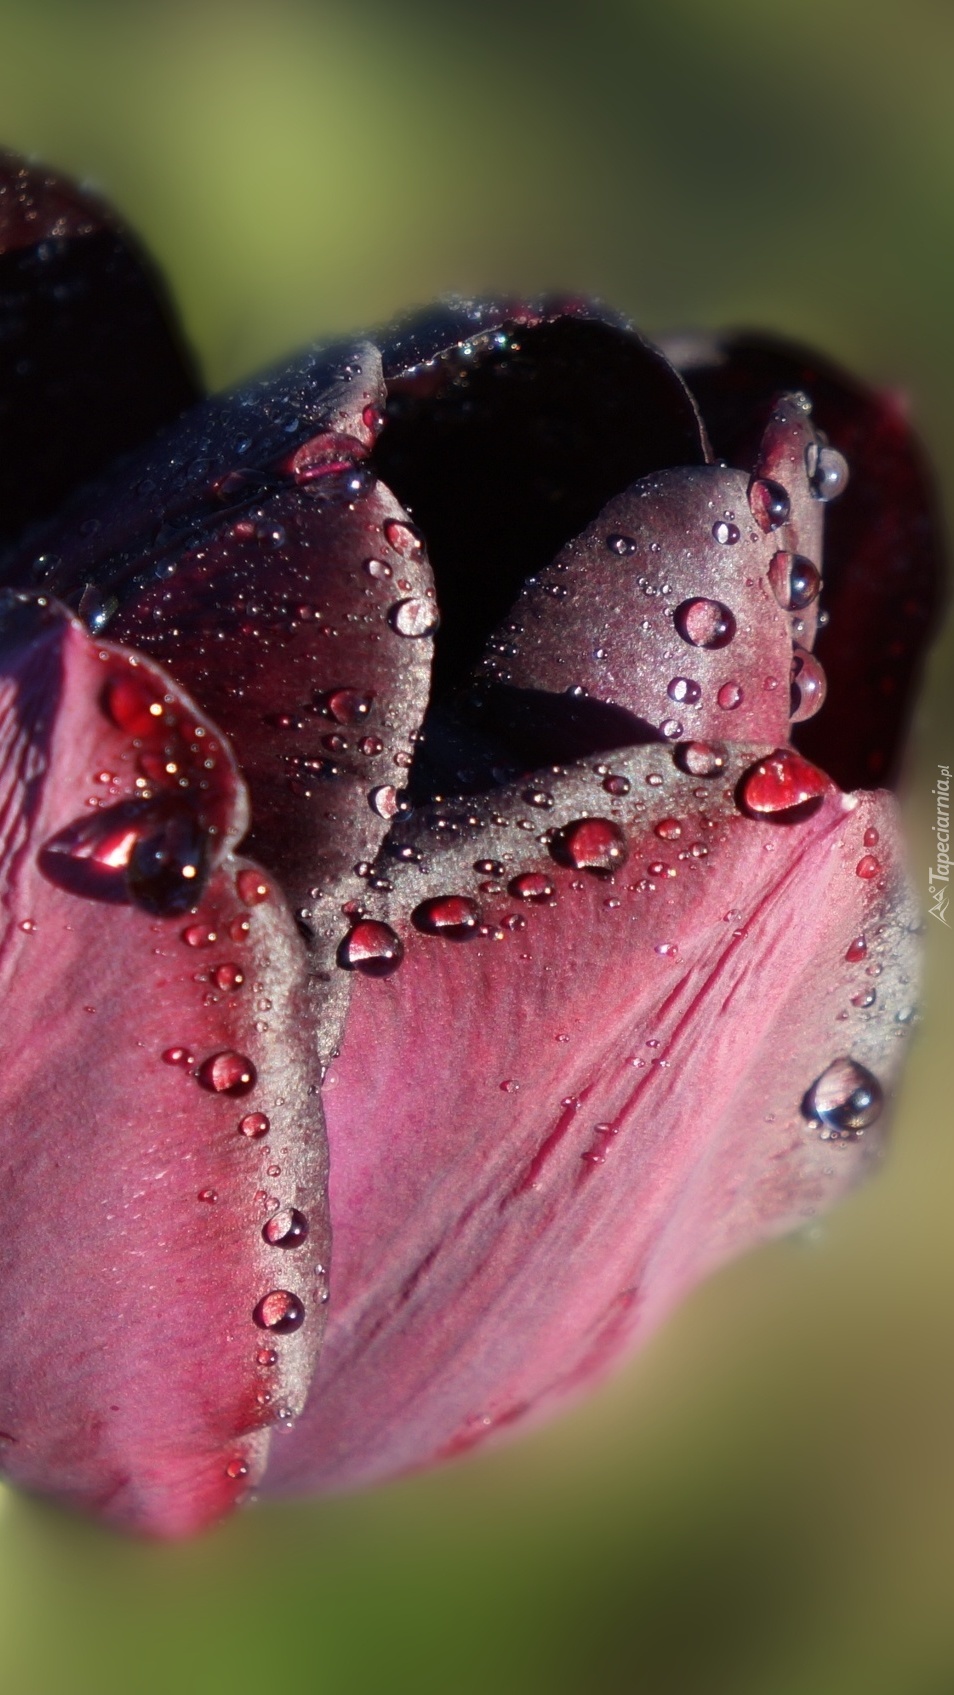 Krople deszczu na tulipanie